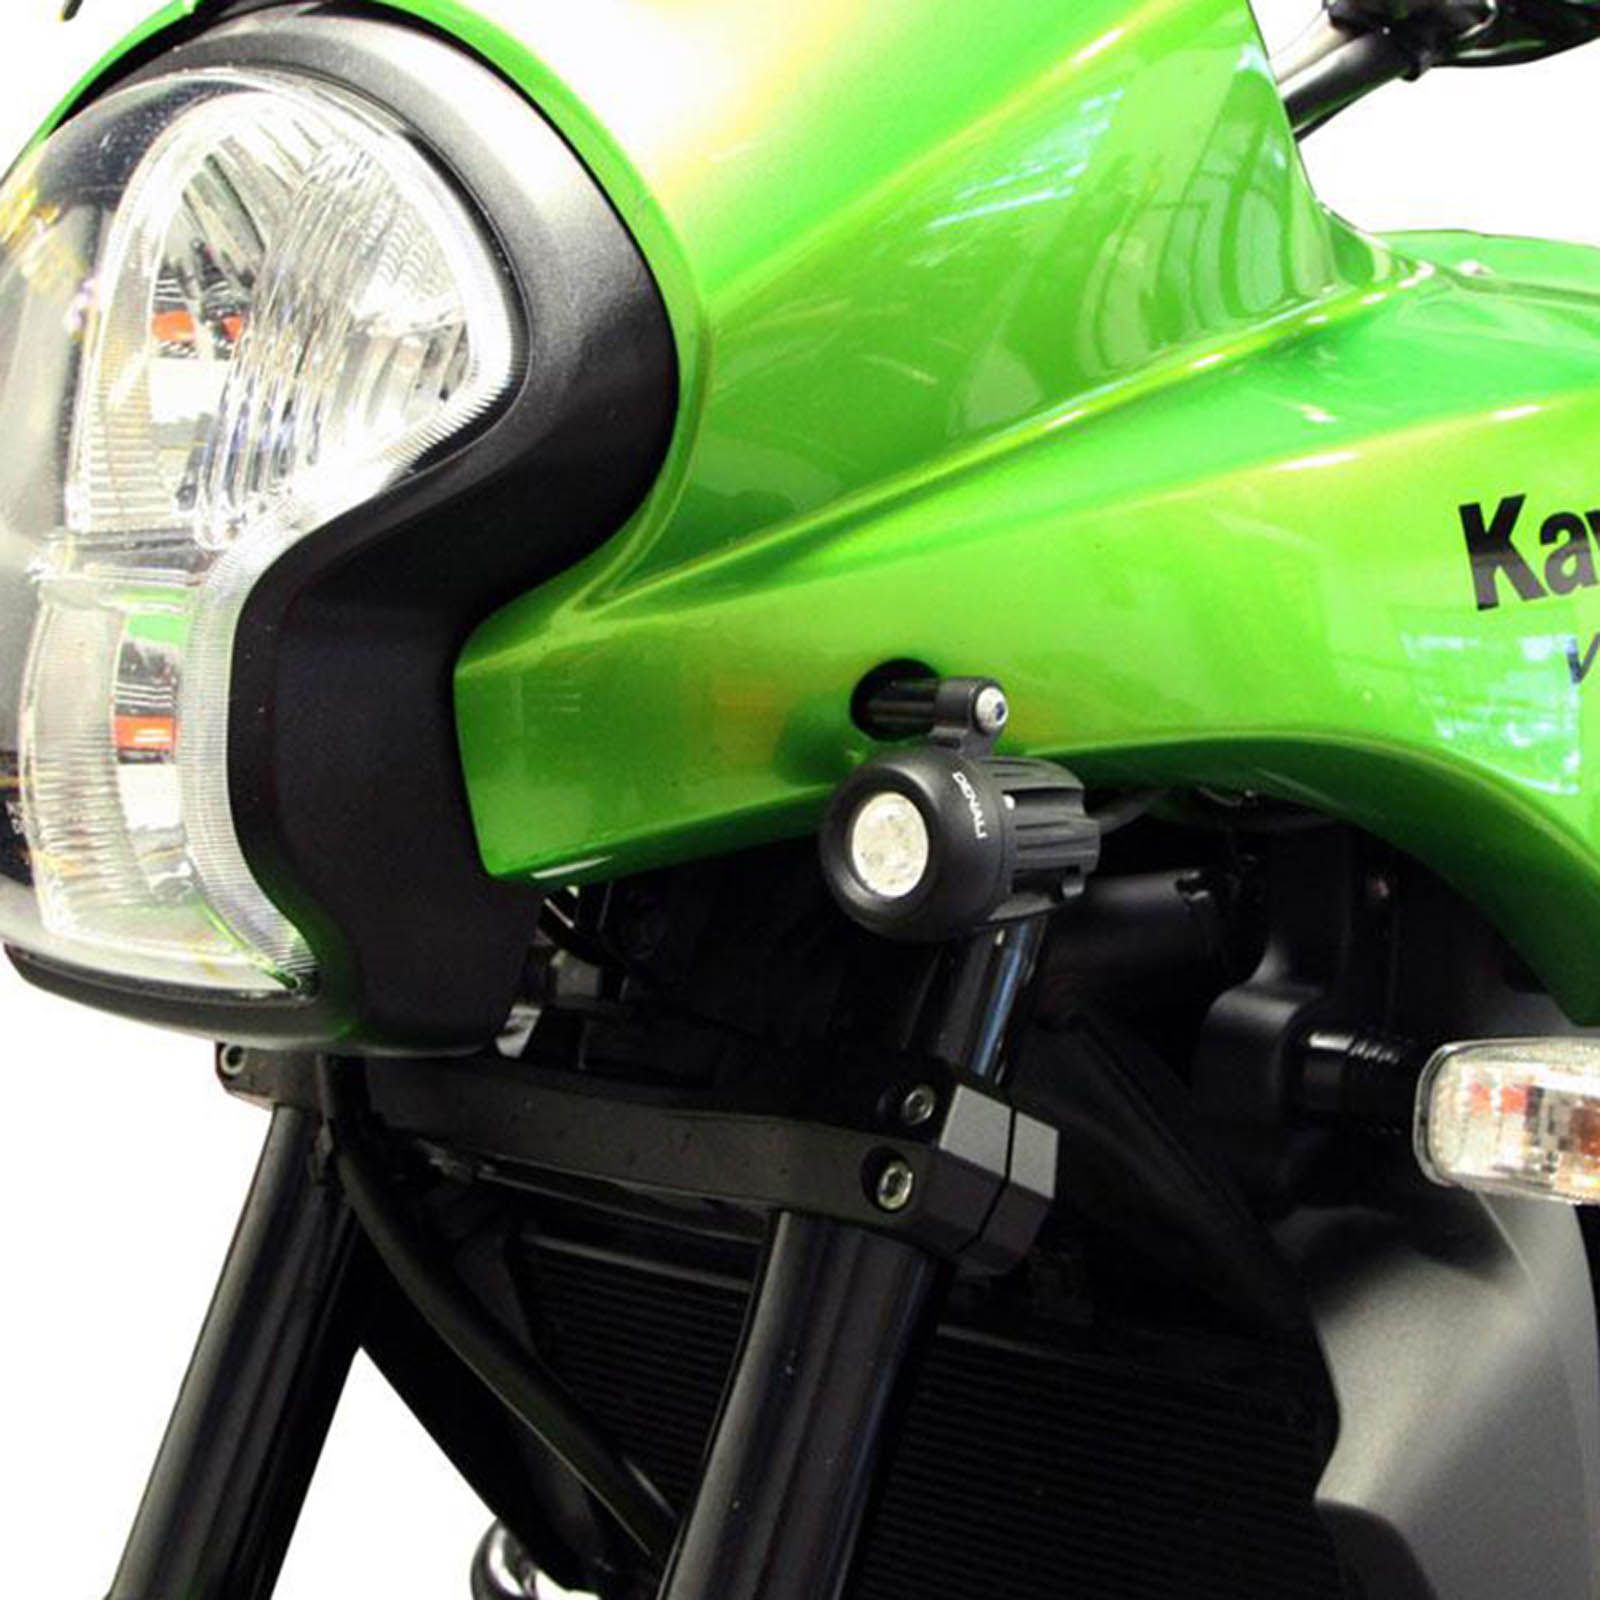 DENALI Light Mount Kit D2 & DM Lights For Kawasaki VERSY 650 2007-2009